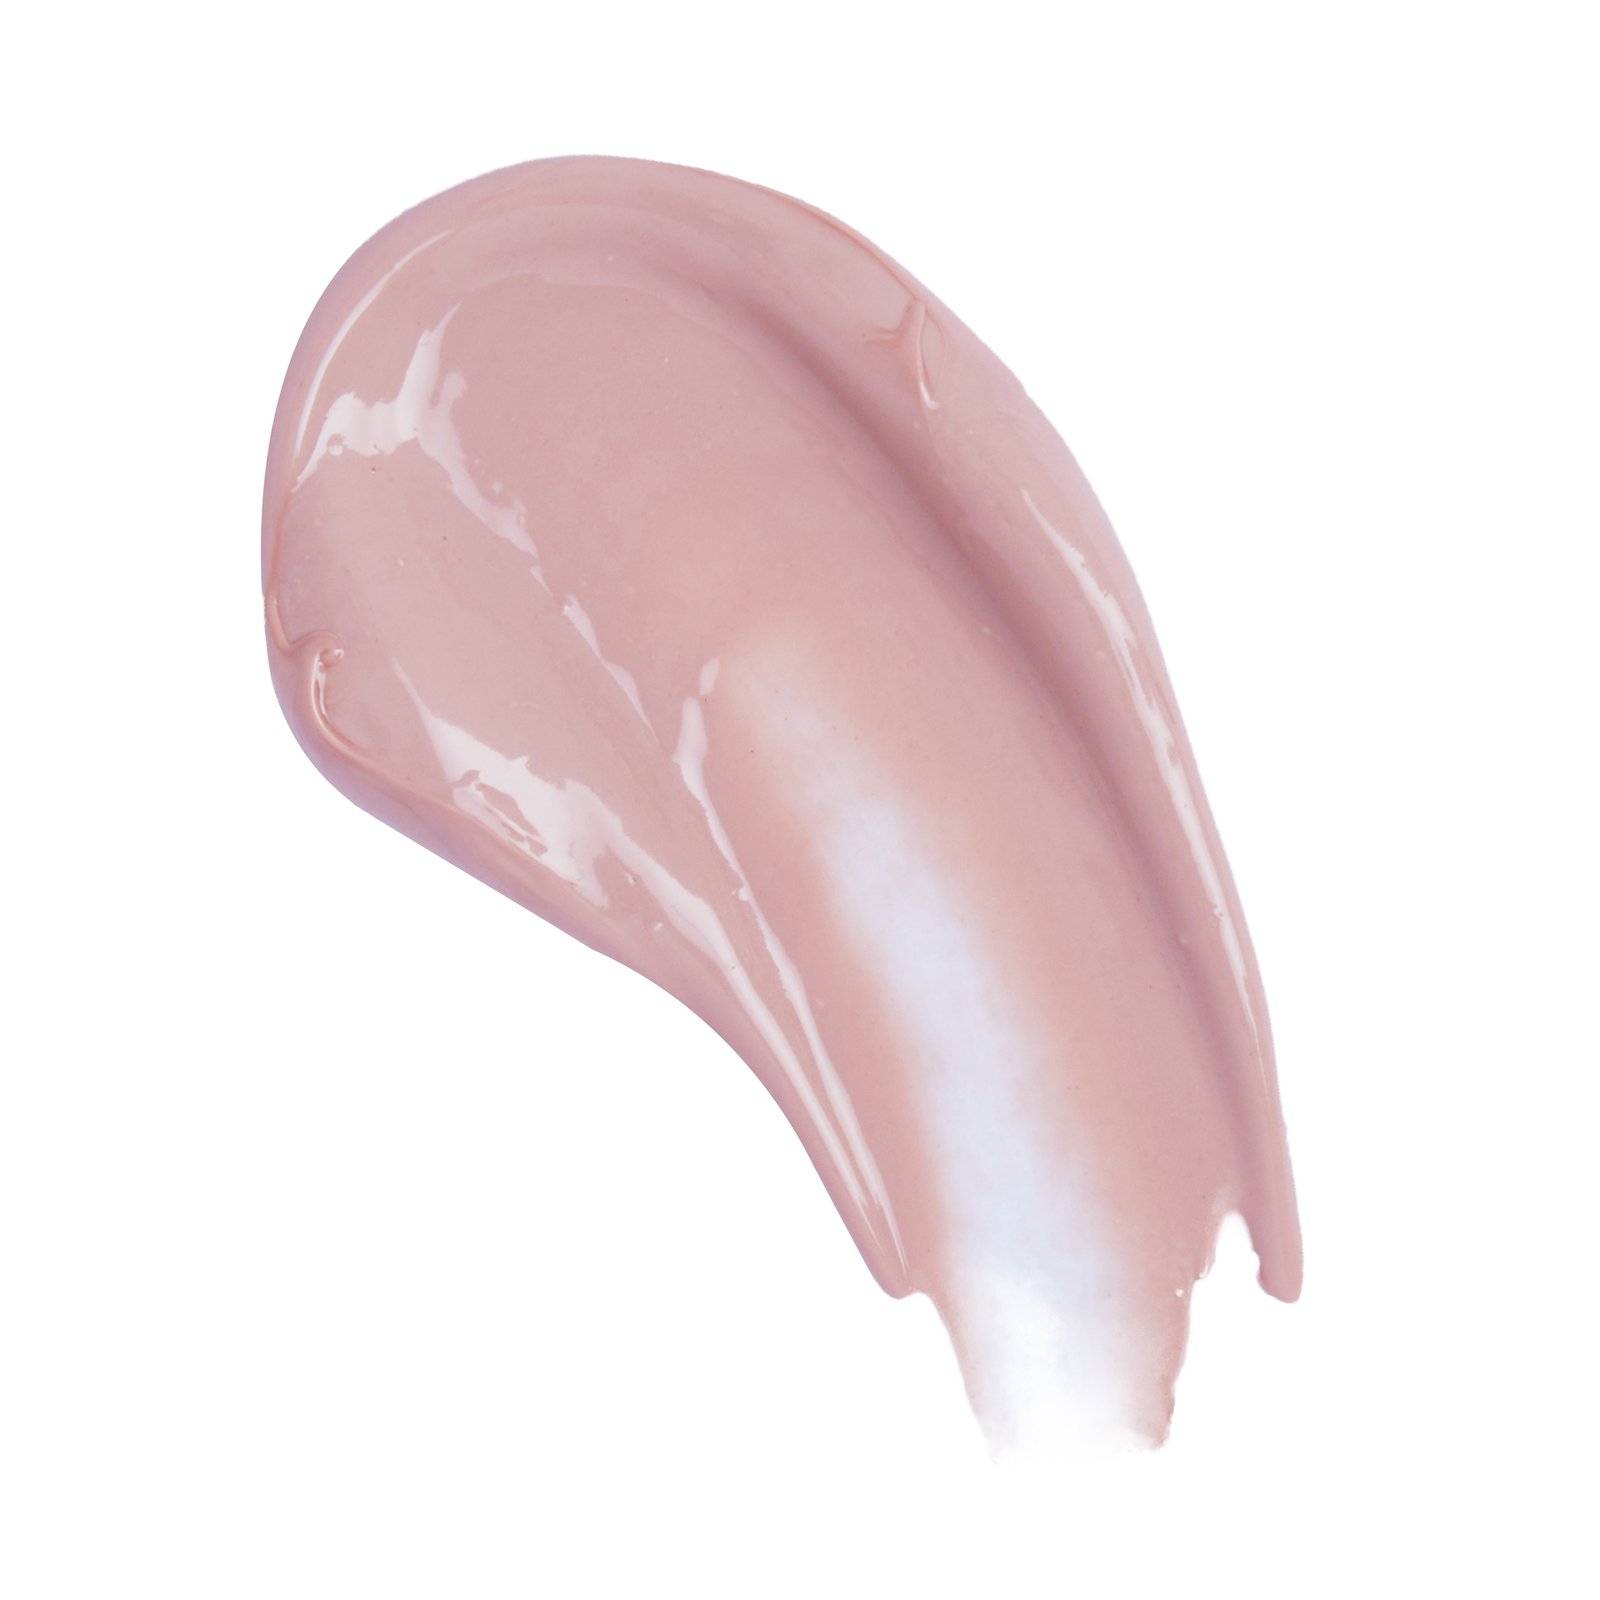 Revolution Skincare Pink Clay Detoxifying Face Mask 50 ml